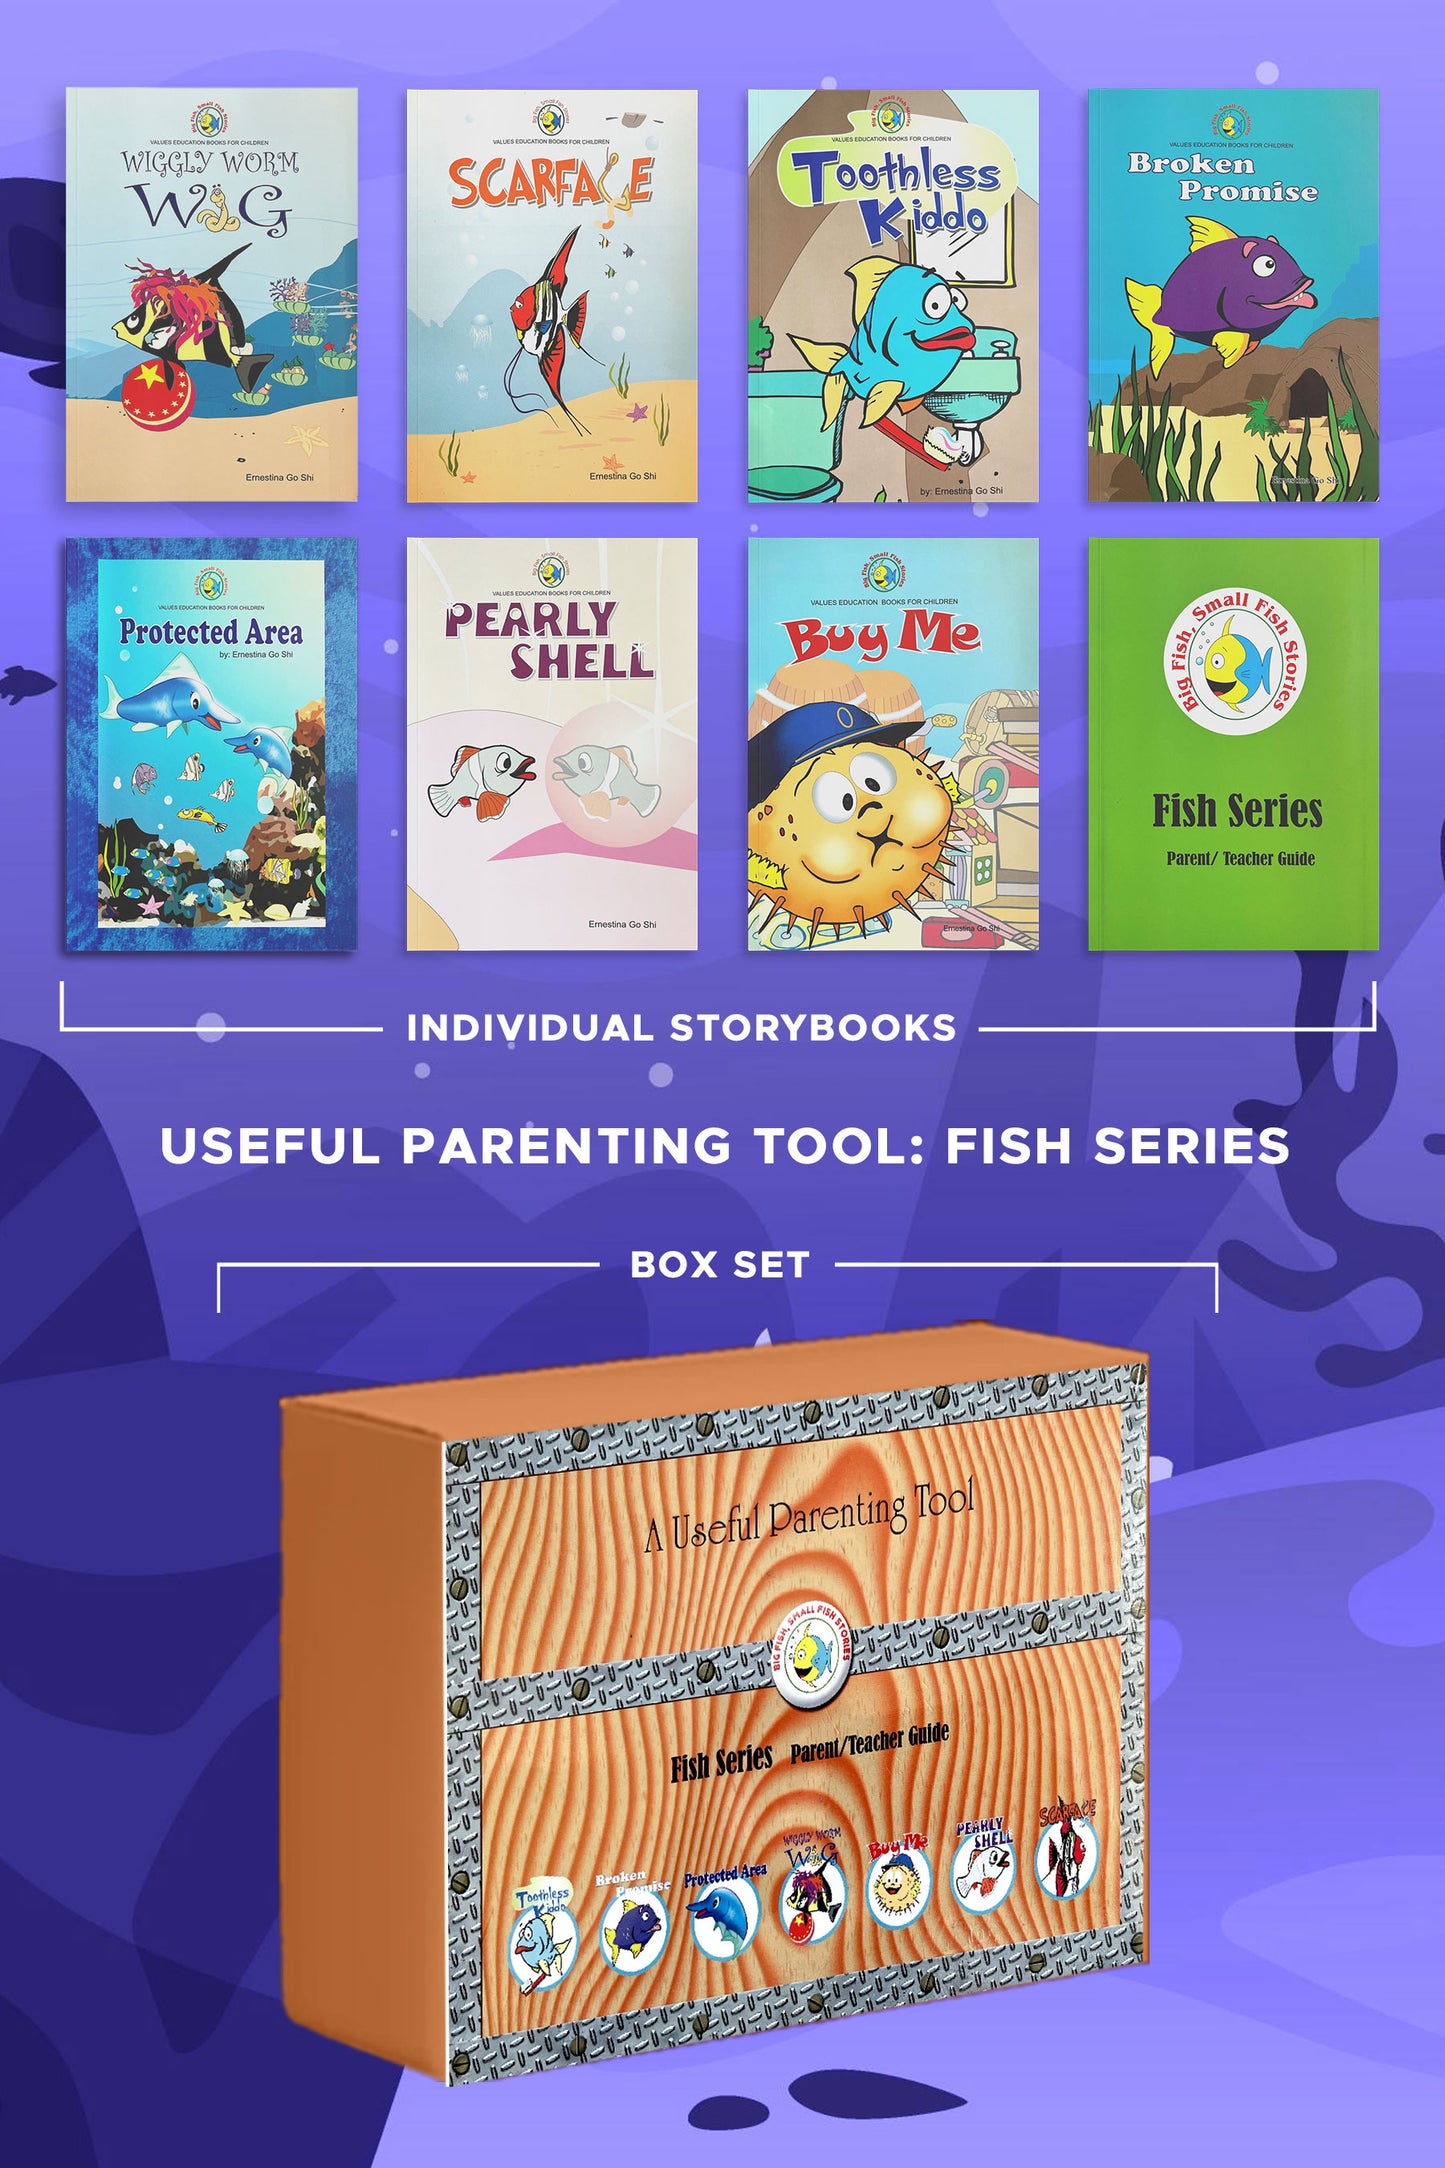 A Useful Parenting Tool: Fish Series